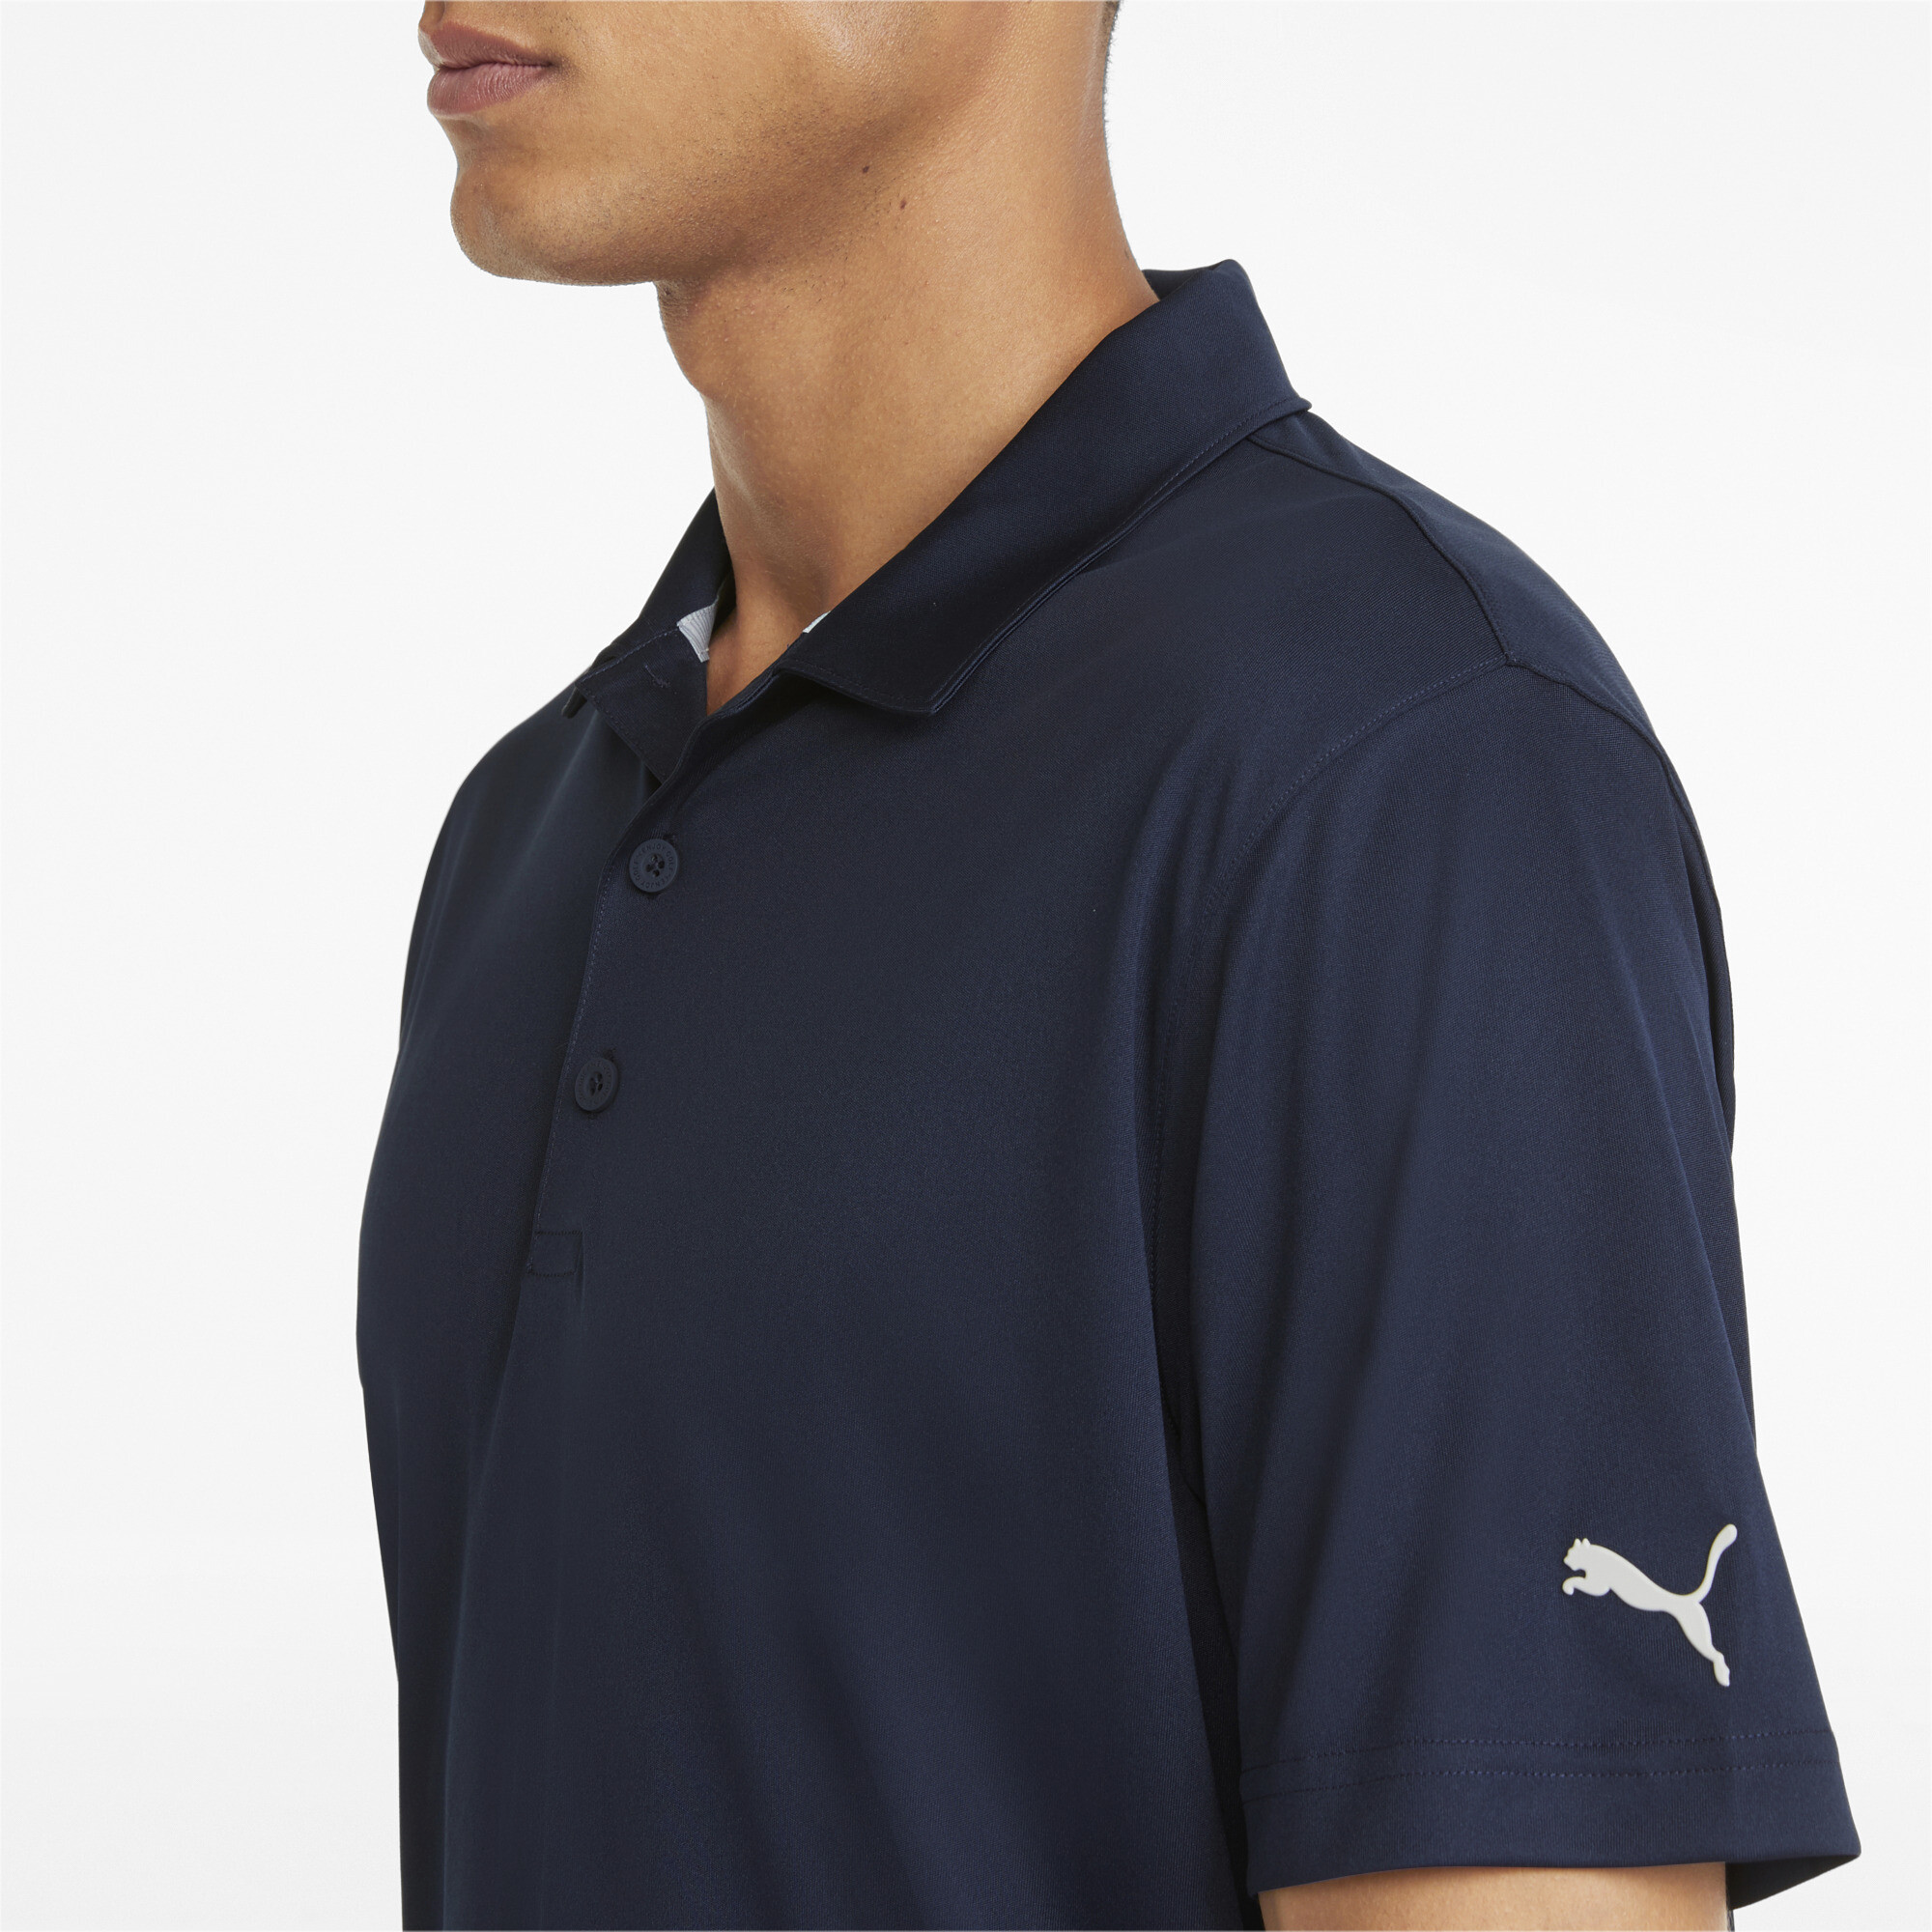 Men's Puma Gamer's Golf Polo Shirt T-Shirt, Blue T-Shirt, Size XXL T-Shirt, Clothing